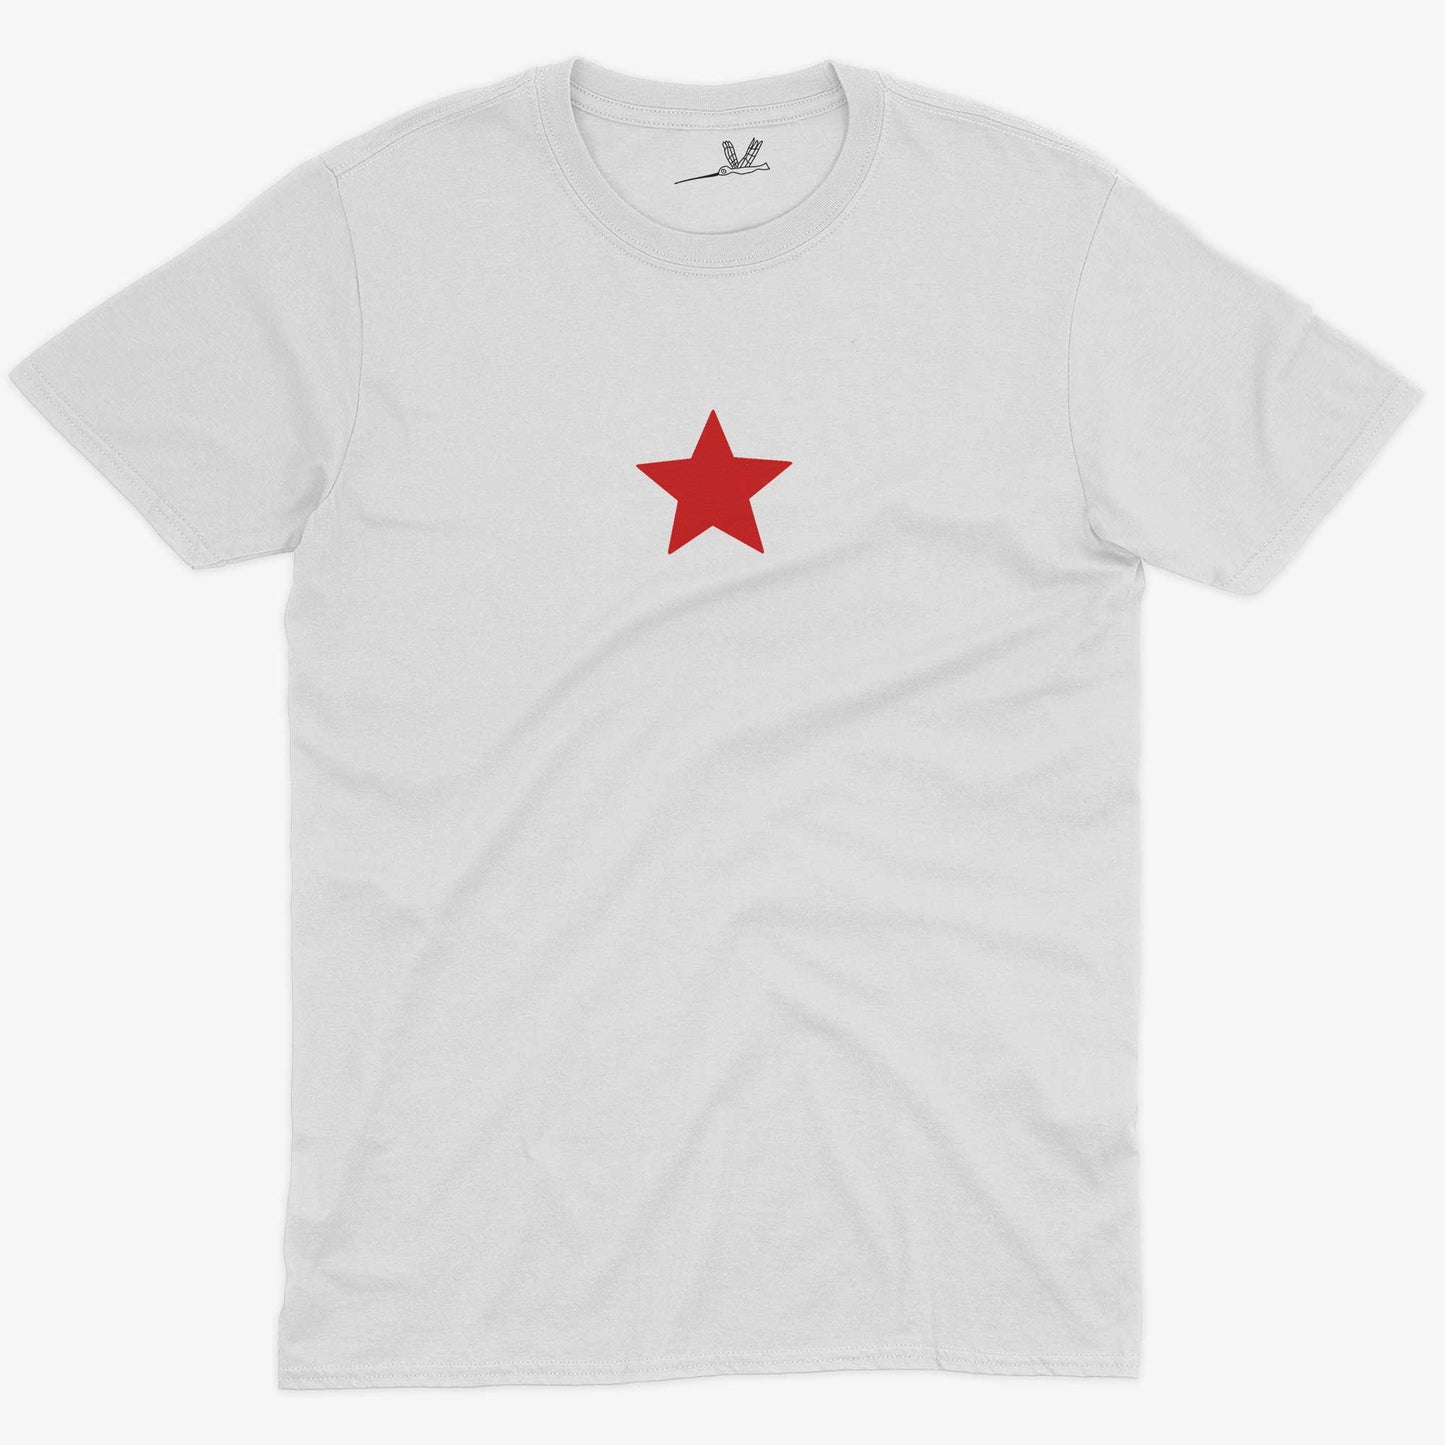 Five-Point Red Star Unisex Or Women's Cotton T-shirt-White-Unisex